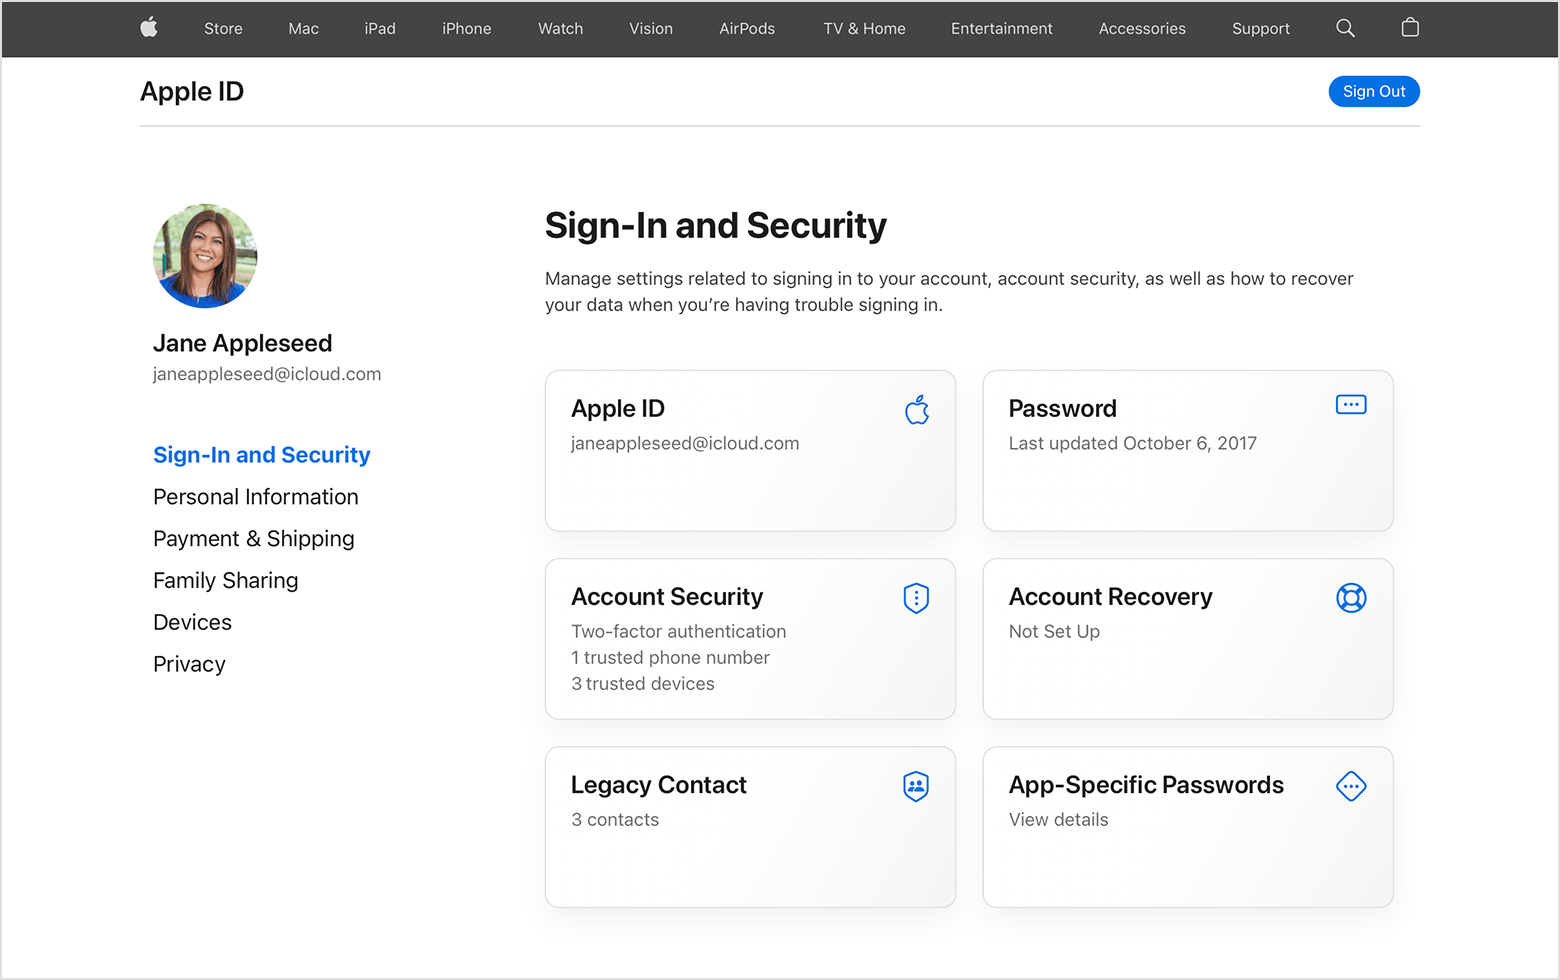 safari-16-4-appleid-apple-com-sign-in-security